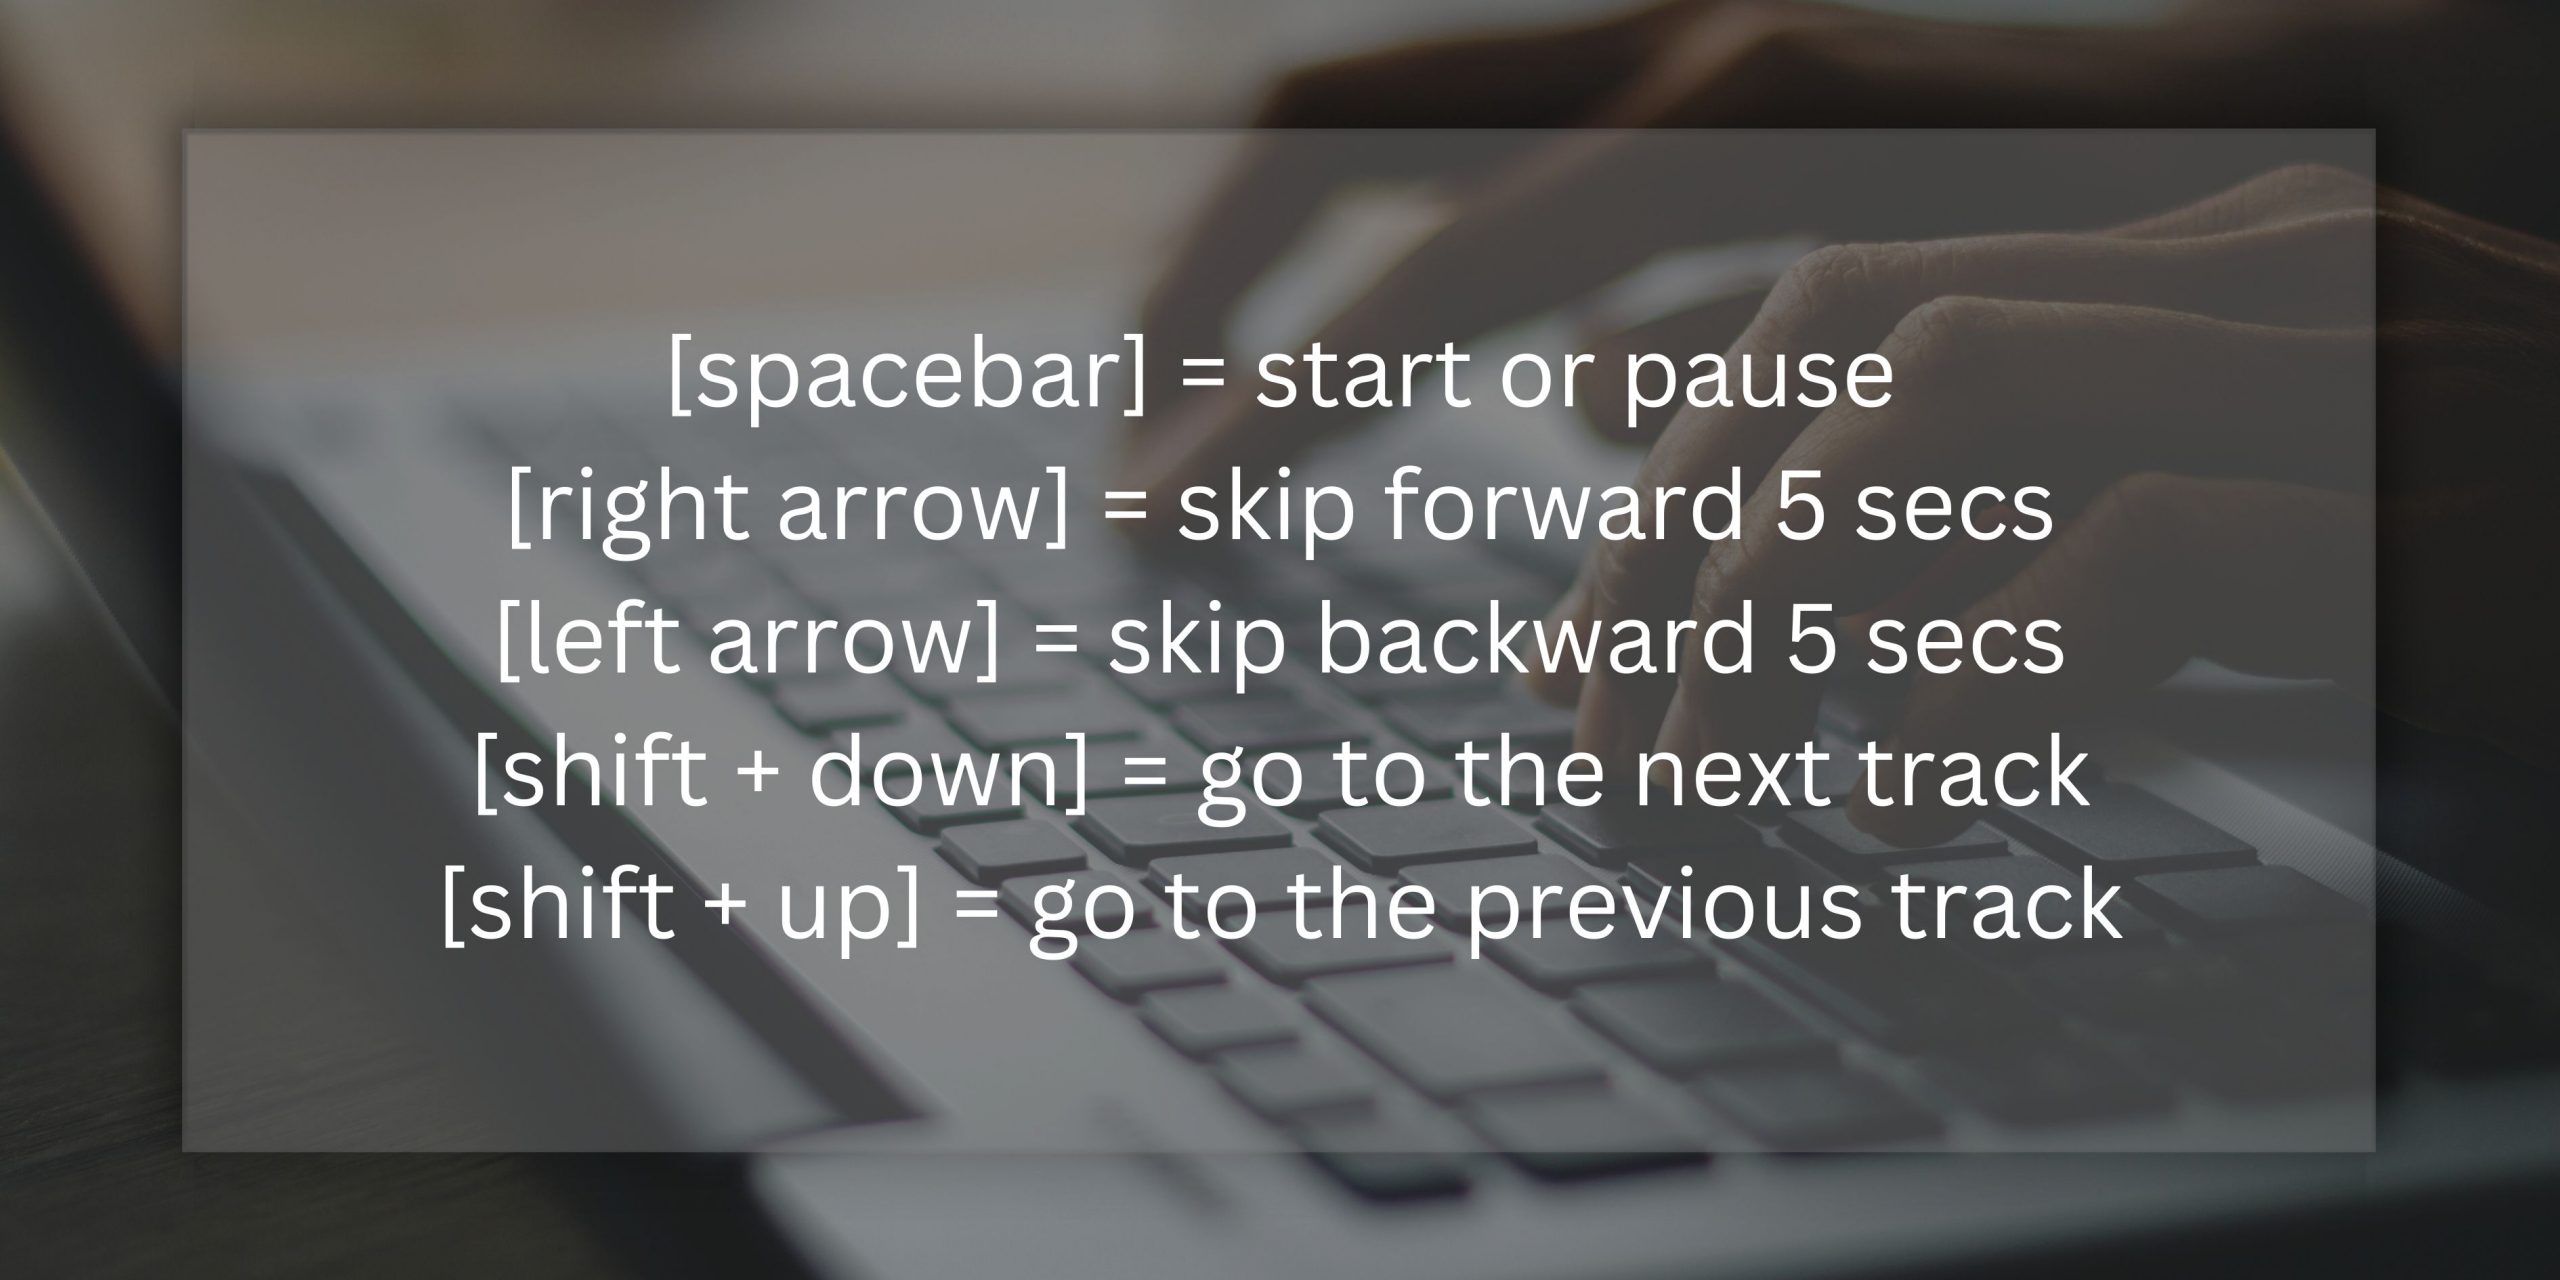 spacebar-start-or-pause-right-arrow-skip-forward-5-secs-left-arrow-skip-backward-5-secs-shift-down-go-to-the-next-track-shift-up-go-to-the-previous-track